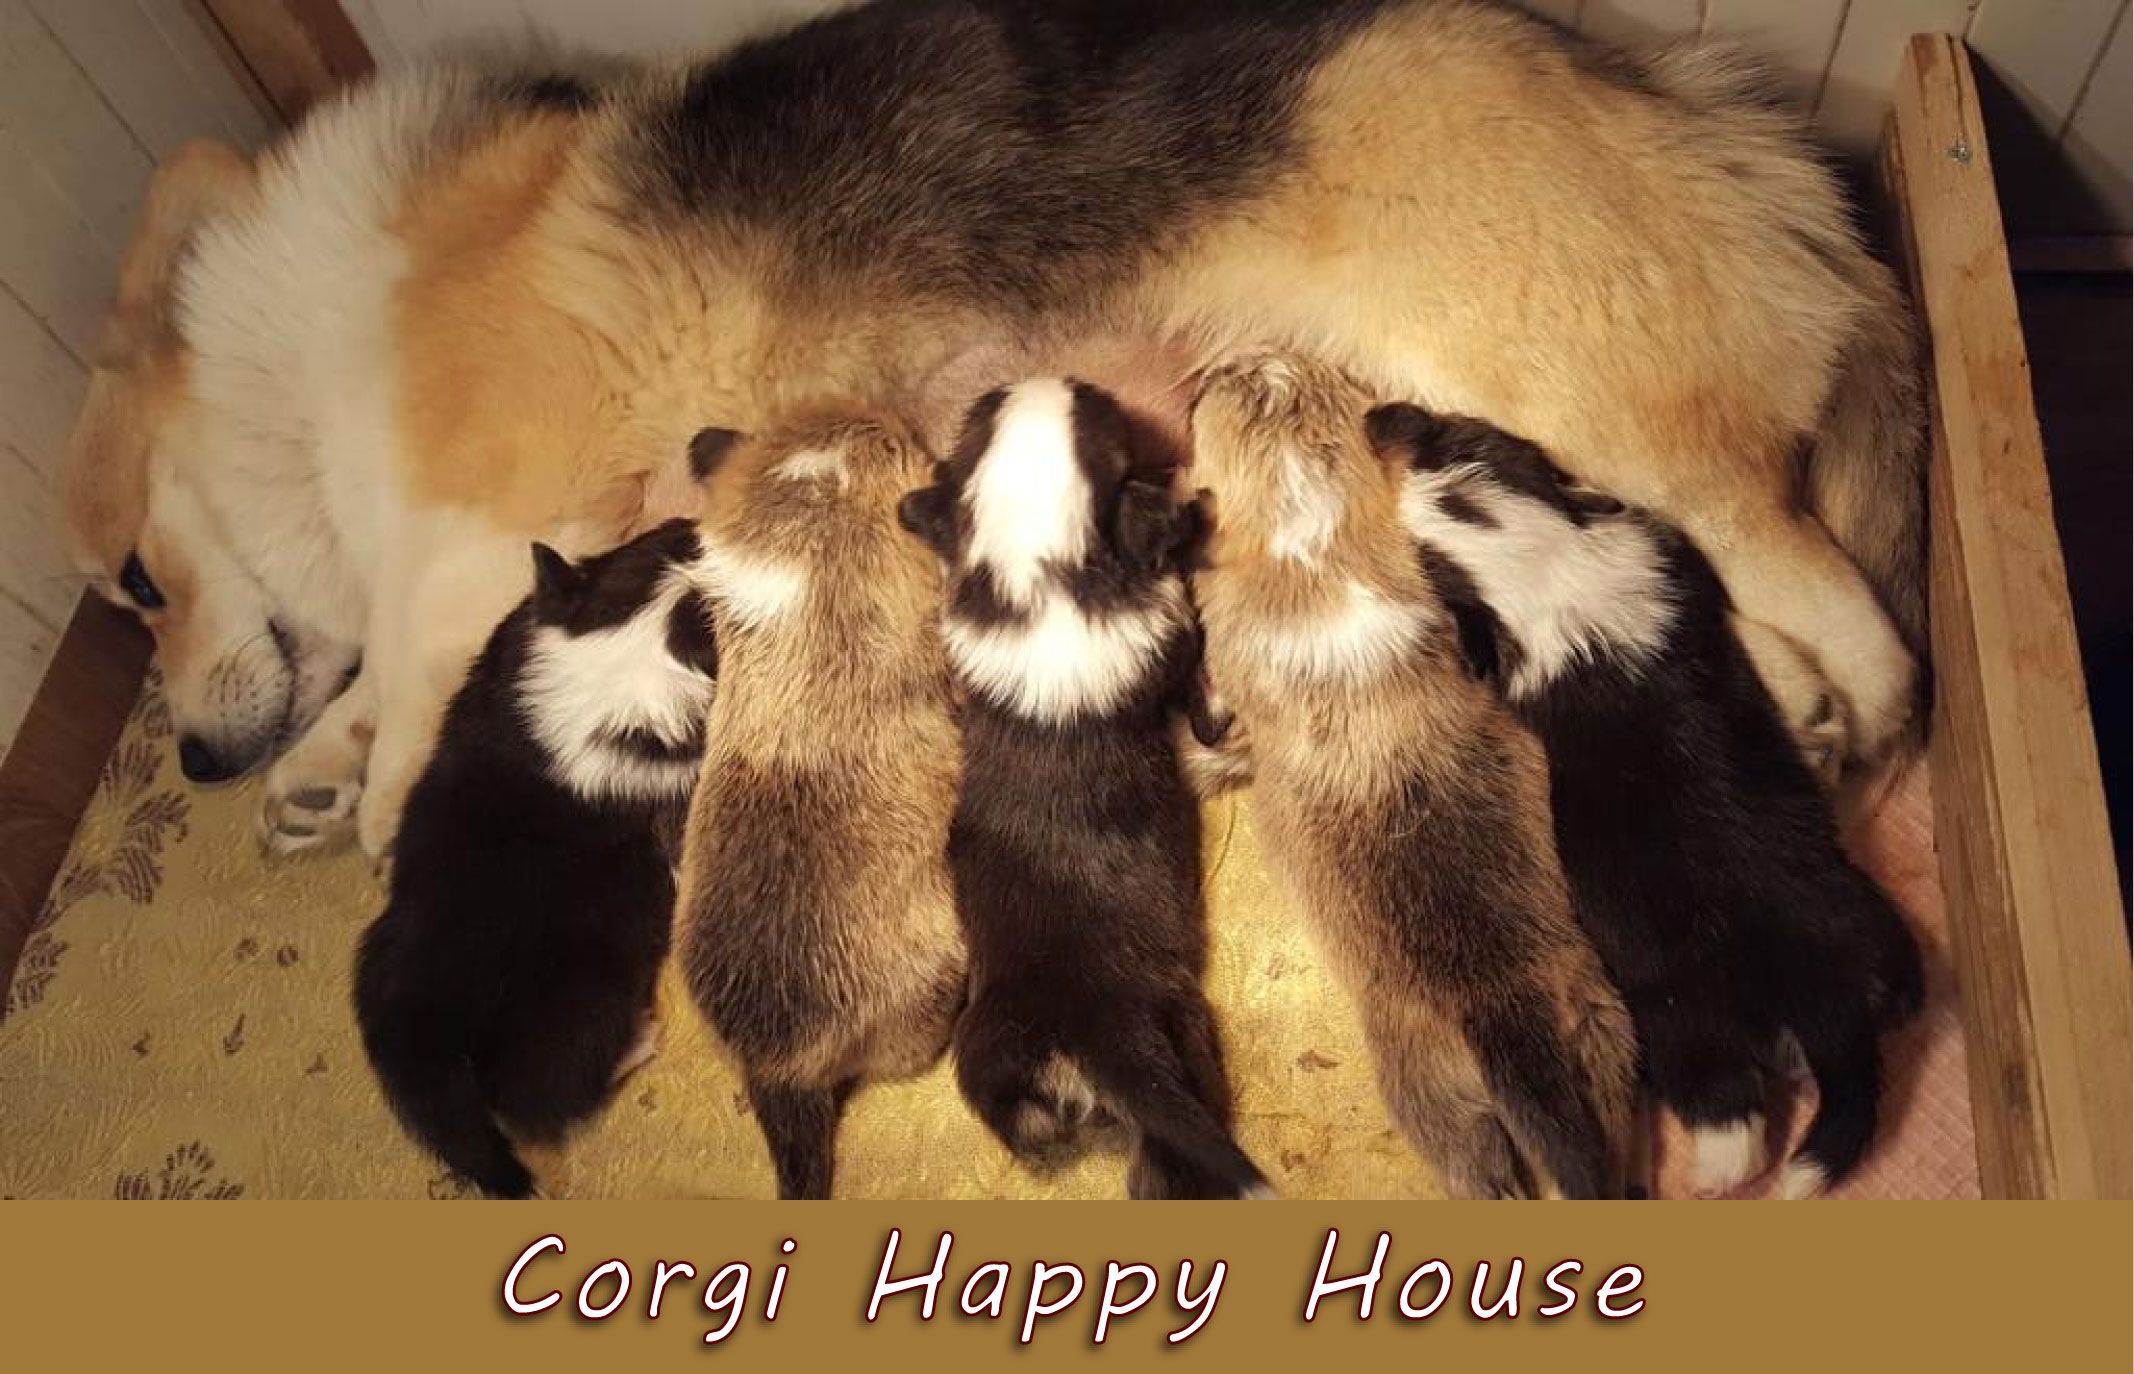 Corgi Happy House